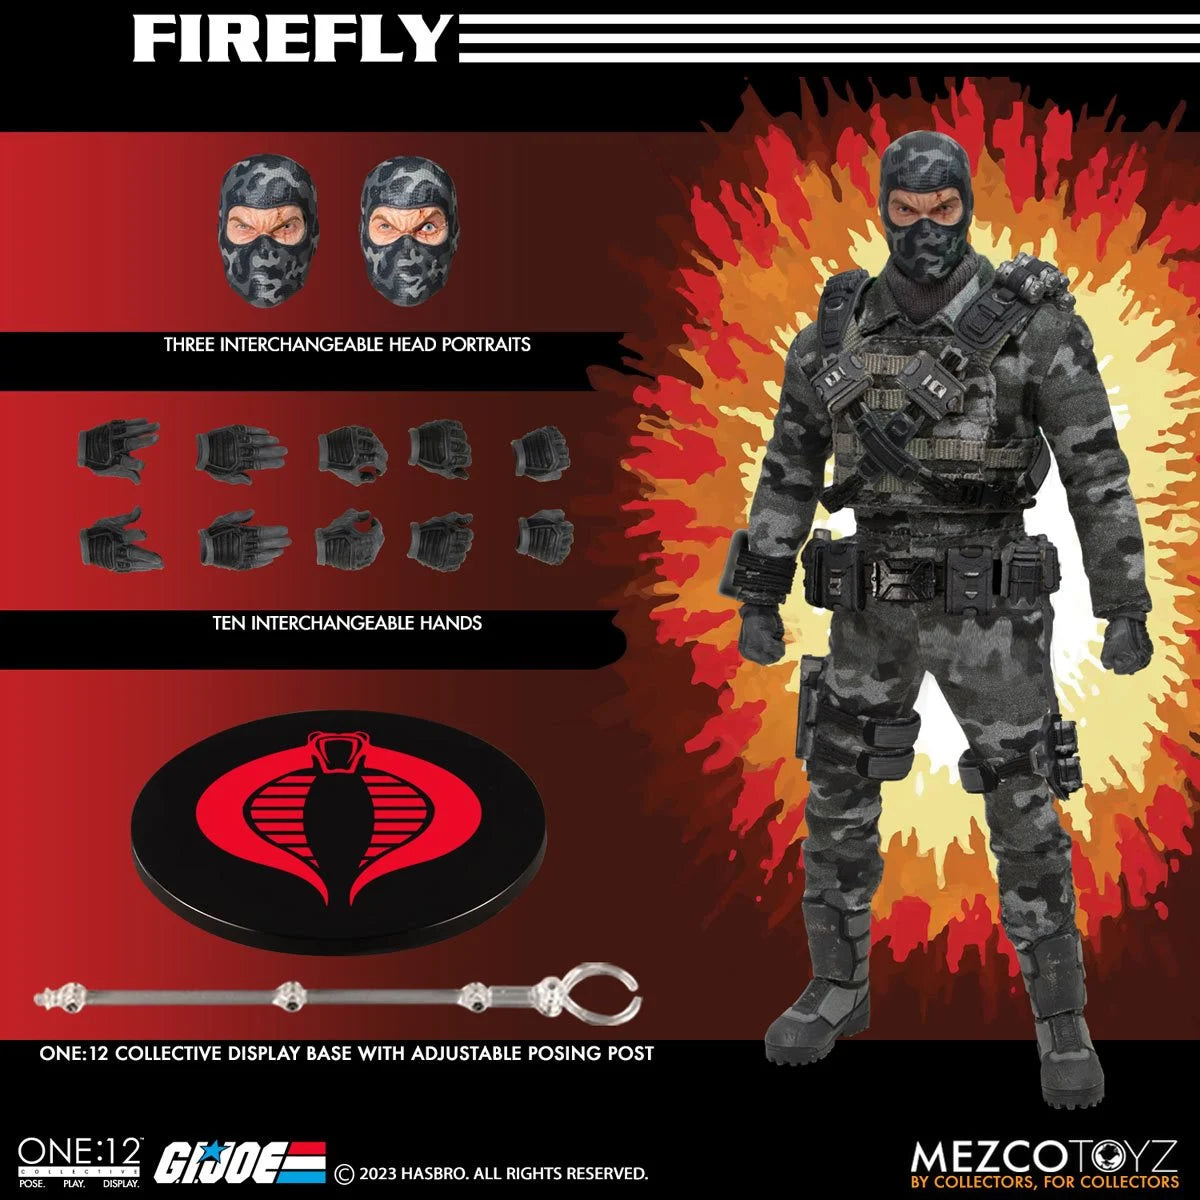 MEZCO - G.I. Joe Firefly One:12 Collective Action Figure